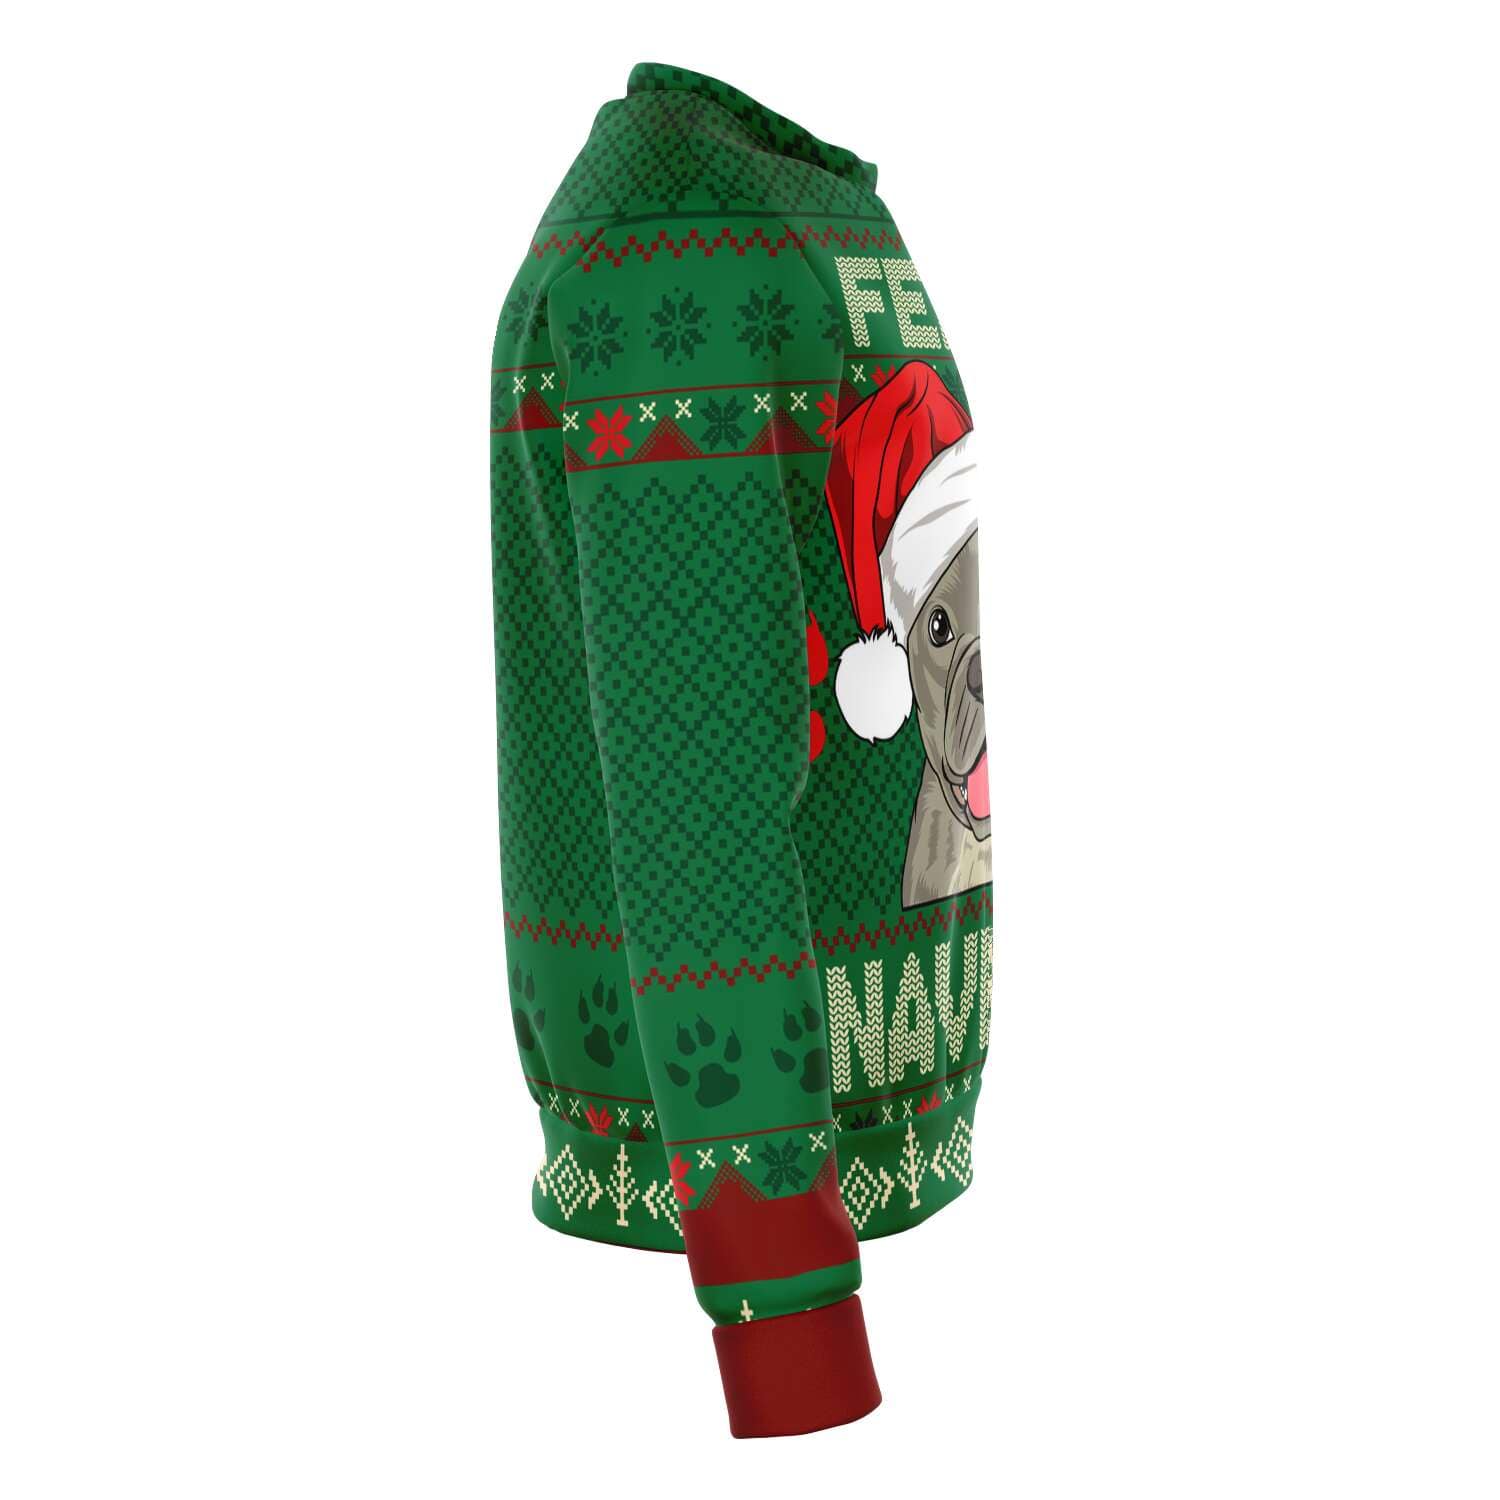 SUBLIMINATOR Feliz Navidog French Bulldog Ugly Christmas Sweaters Sweatshirt